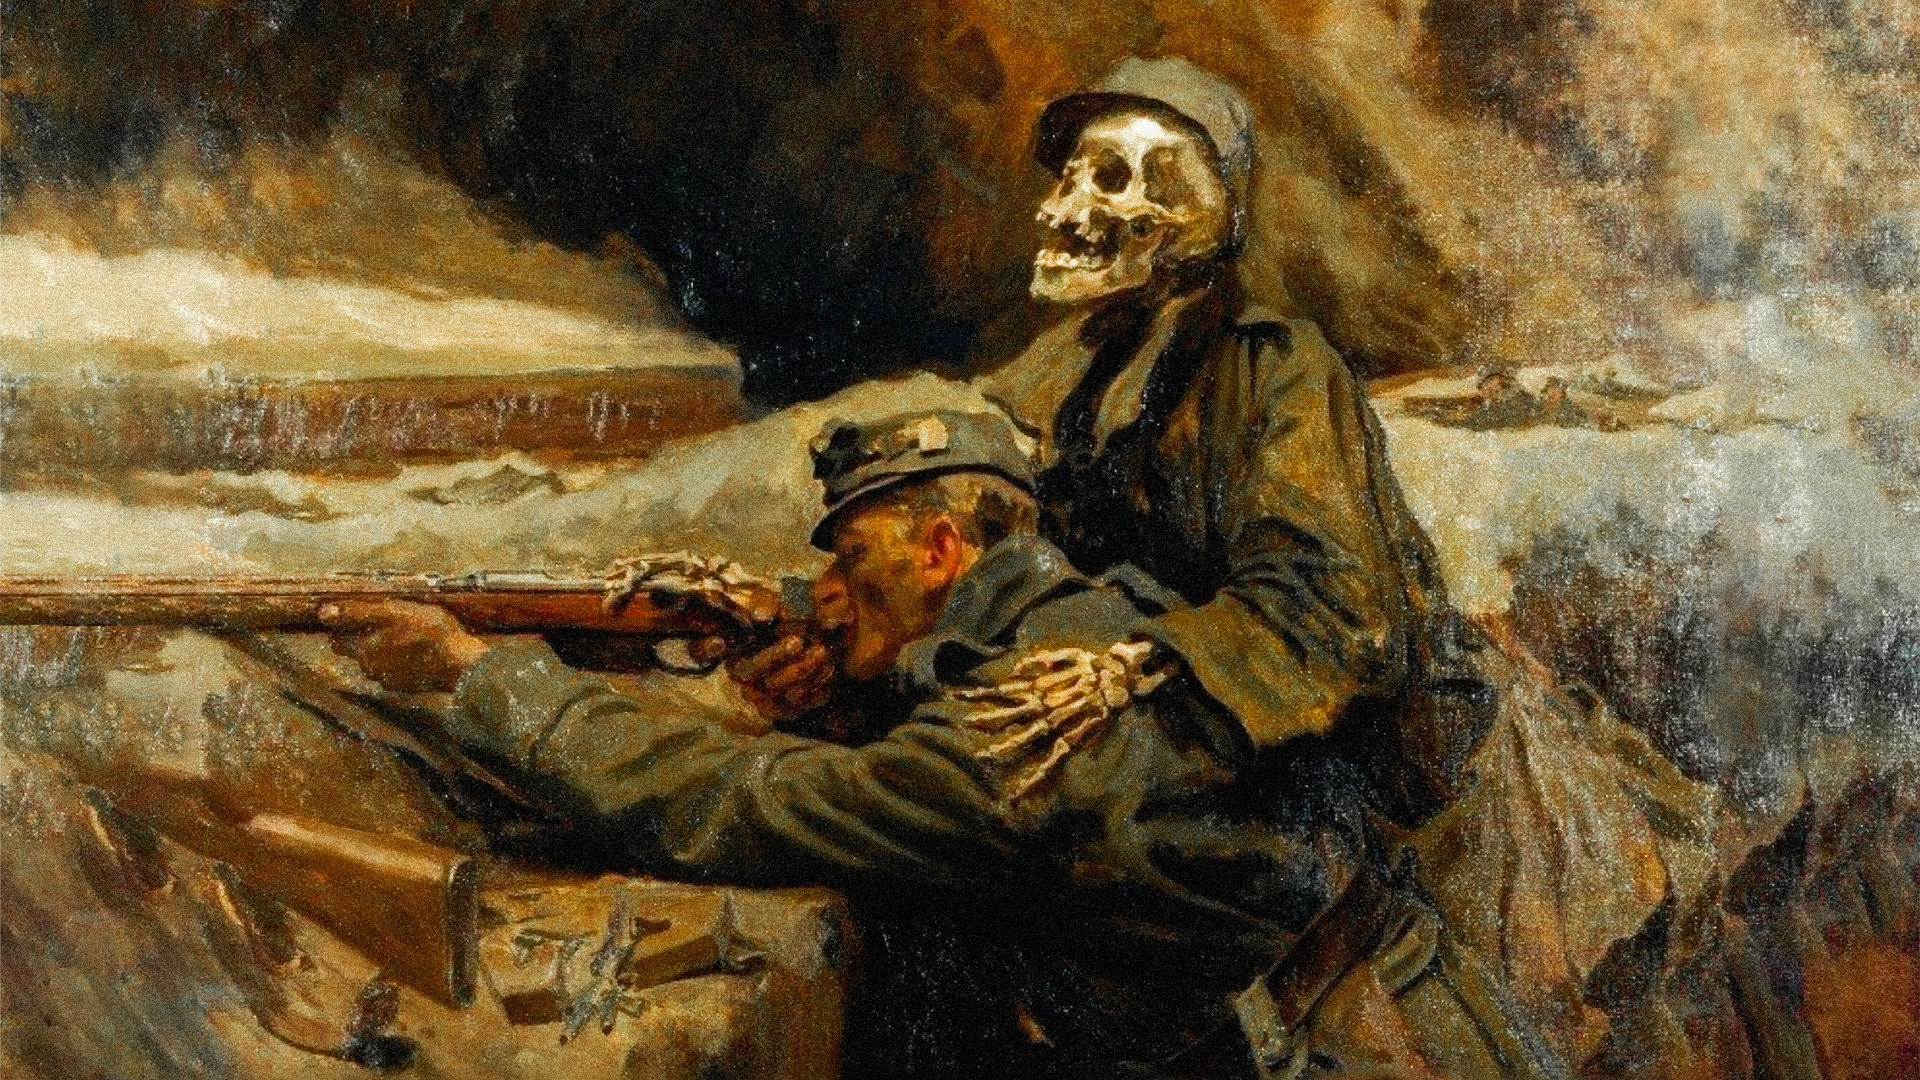 General 1920x1080 painting soldier war death skull skeleton rifles